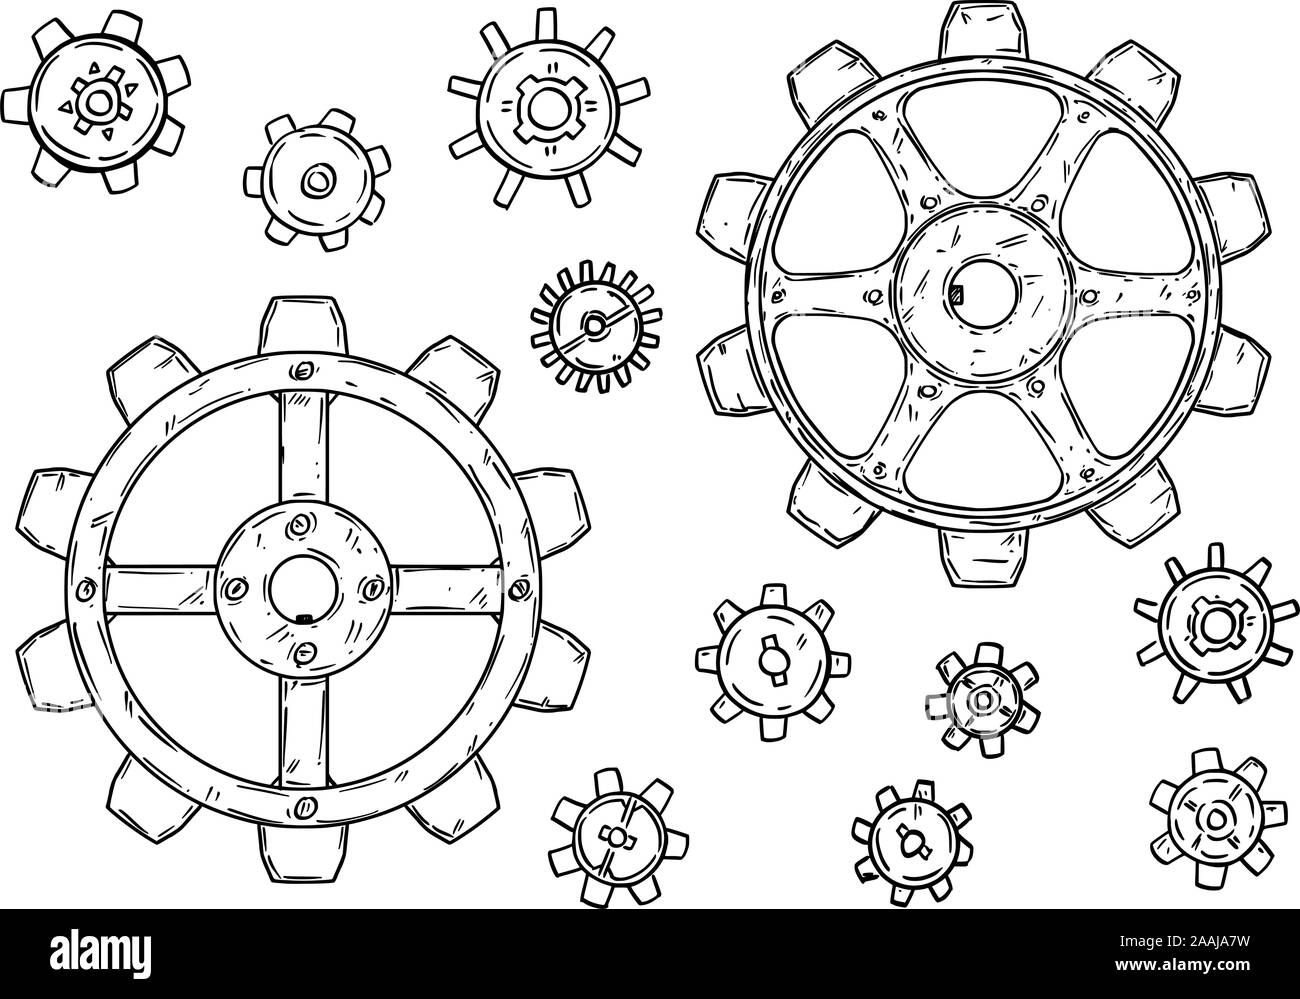 Dibujo Vectorial o ilustración de conjunto de ruedas dentadas o engranajes  o ruedas dentadas en negro sobre fondo blanco Imagen Vector de stock - Alamy